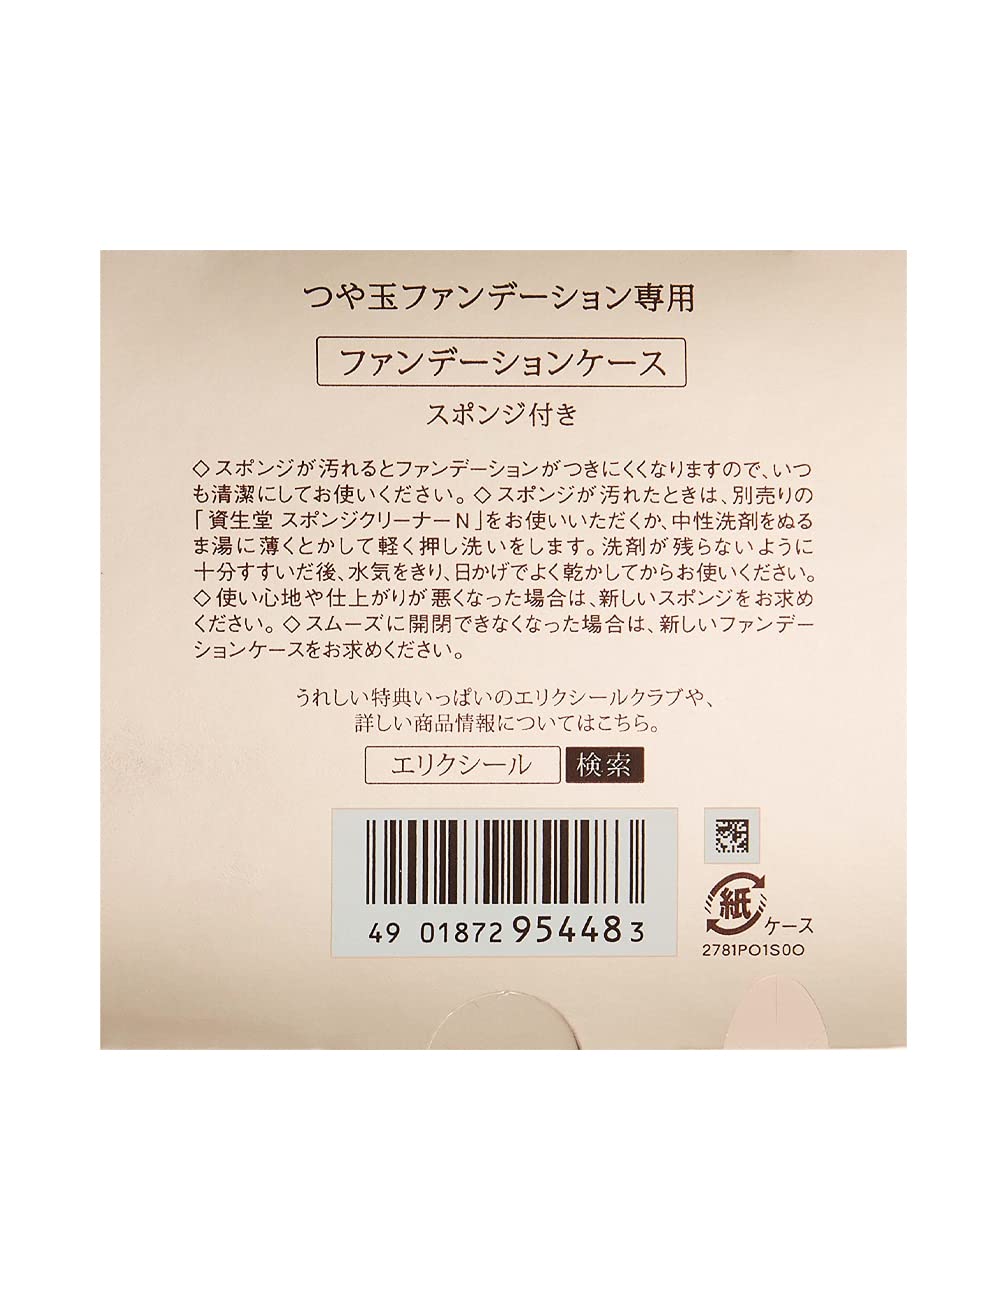 Elixir Japan Superieur Glossy Ball Foundation Case 1Pc